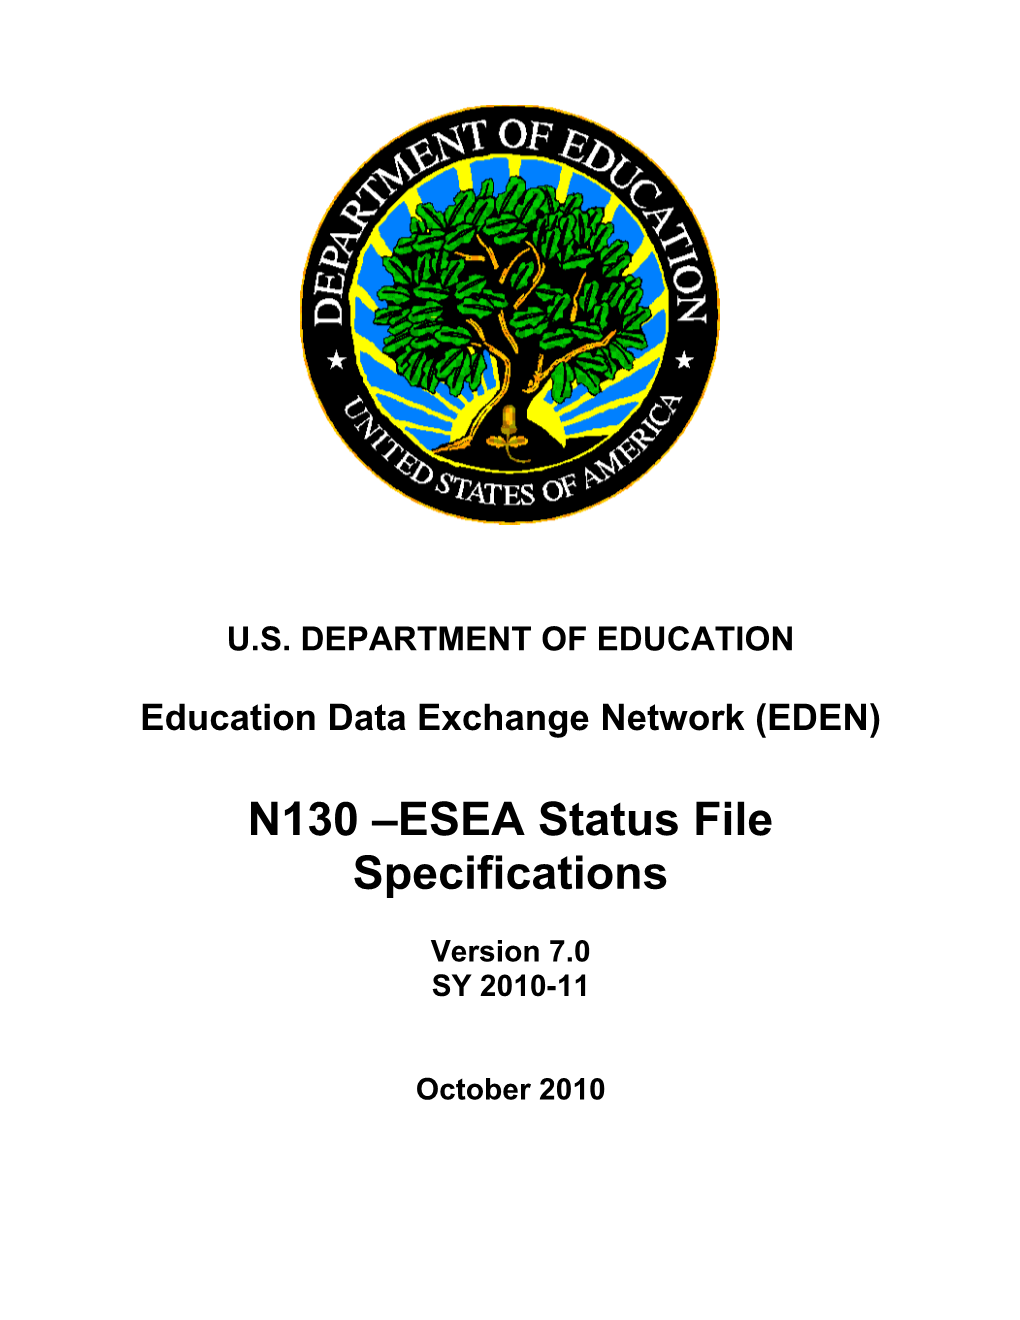 ESEA Status File Specifications